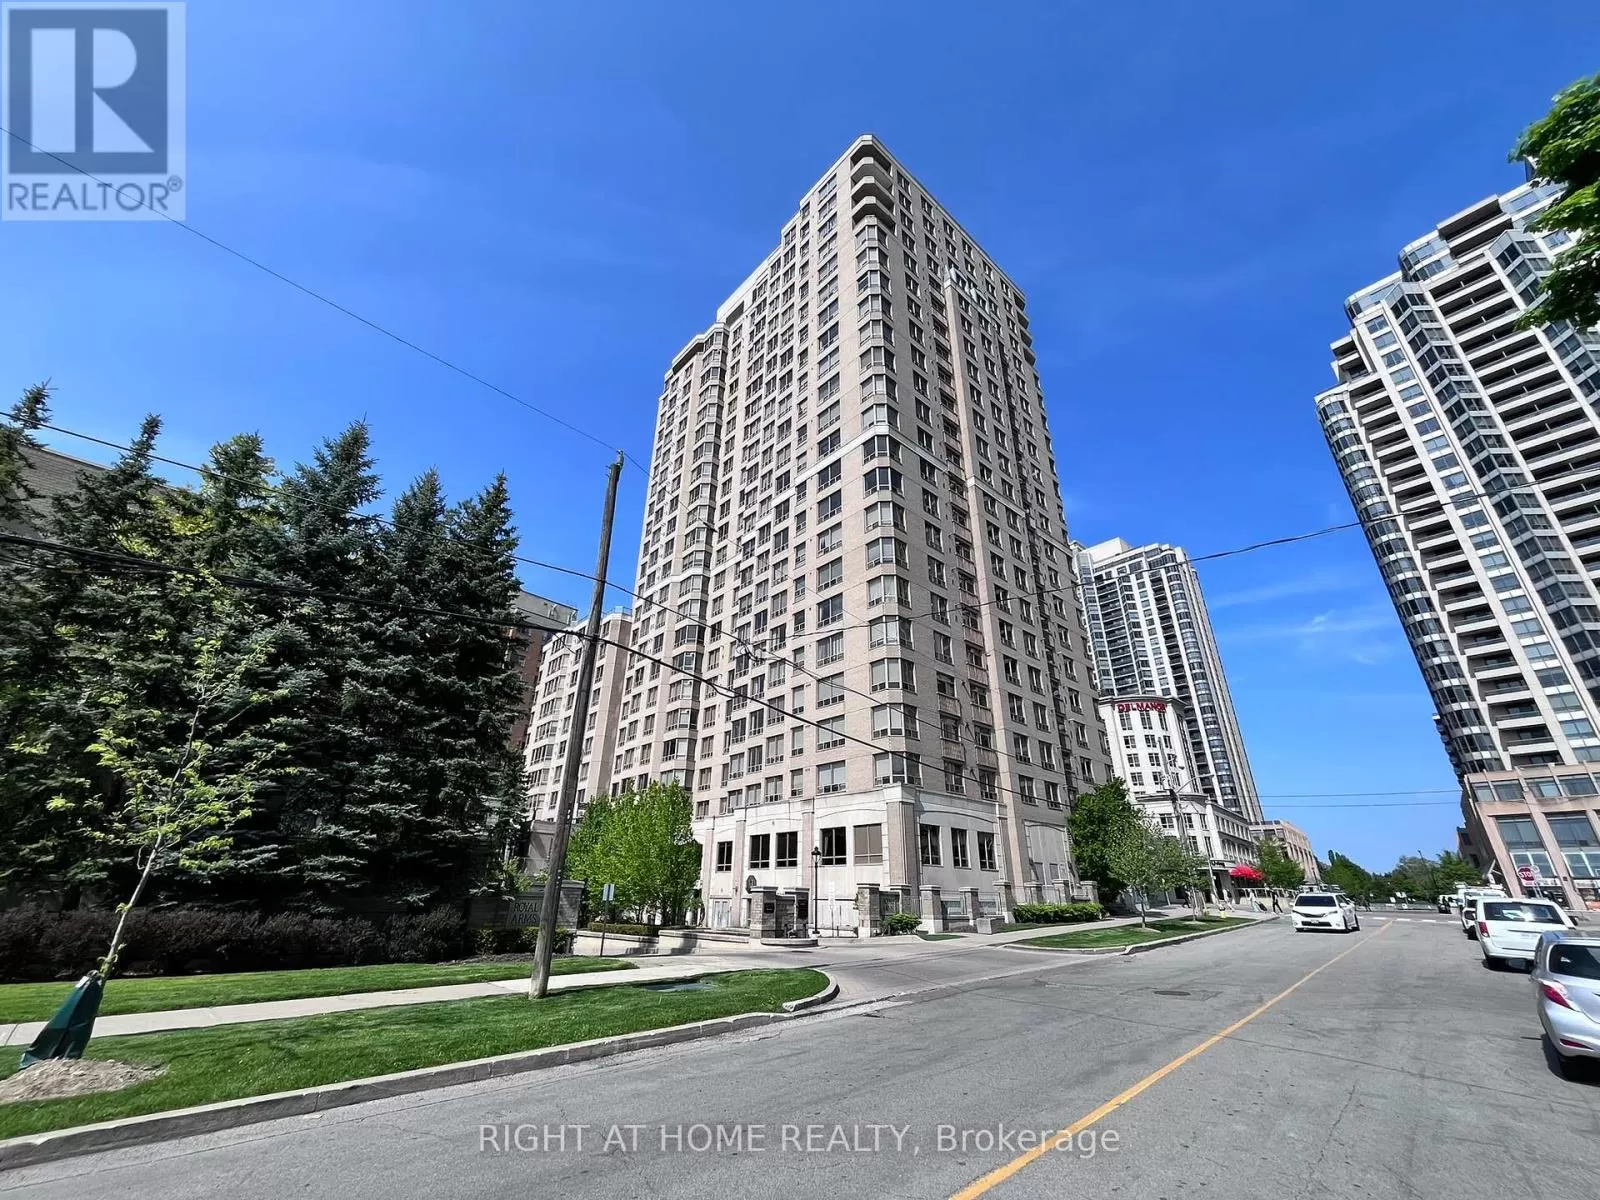 Apartment for rent: 1716 - 5418 Yonge Street, Toronto, Ontario M2N 5R8